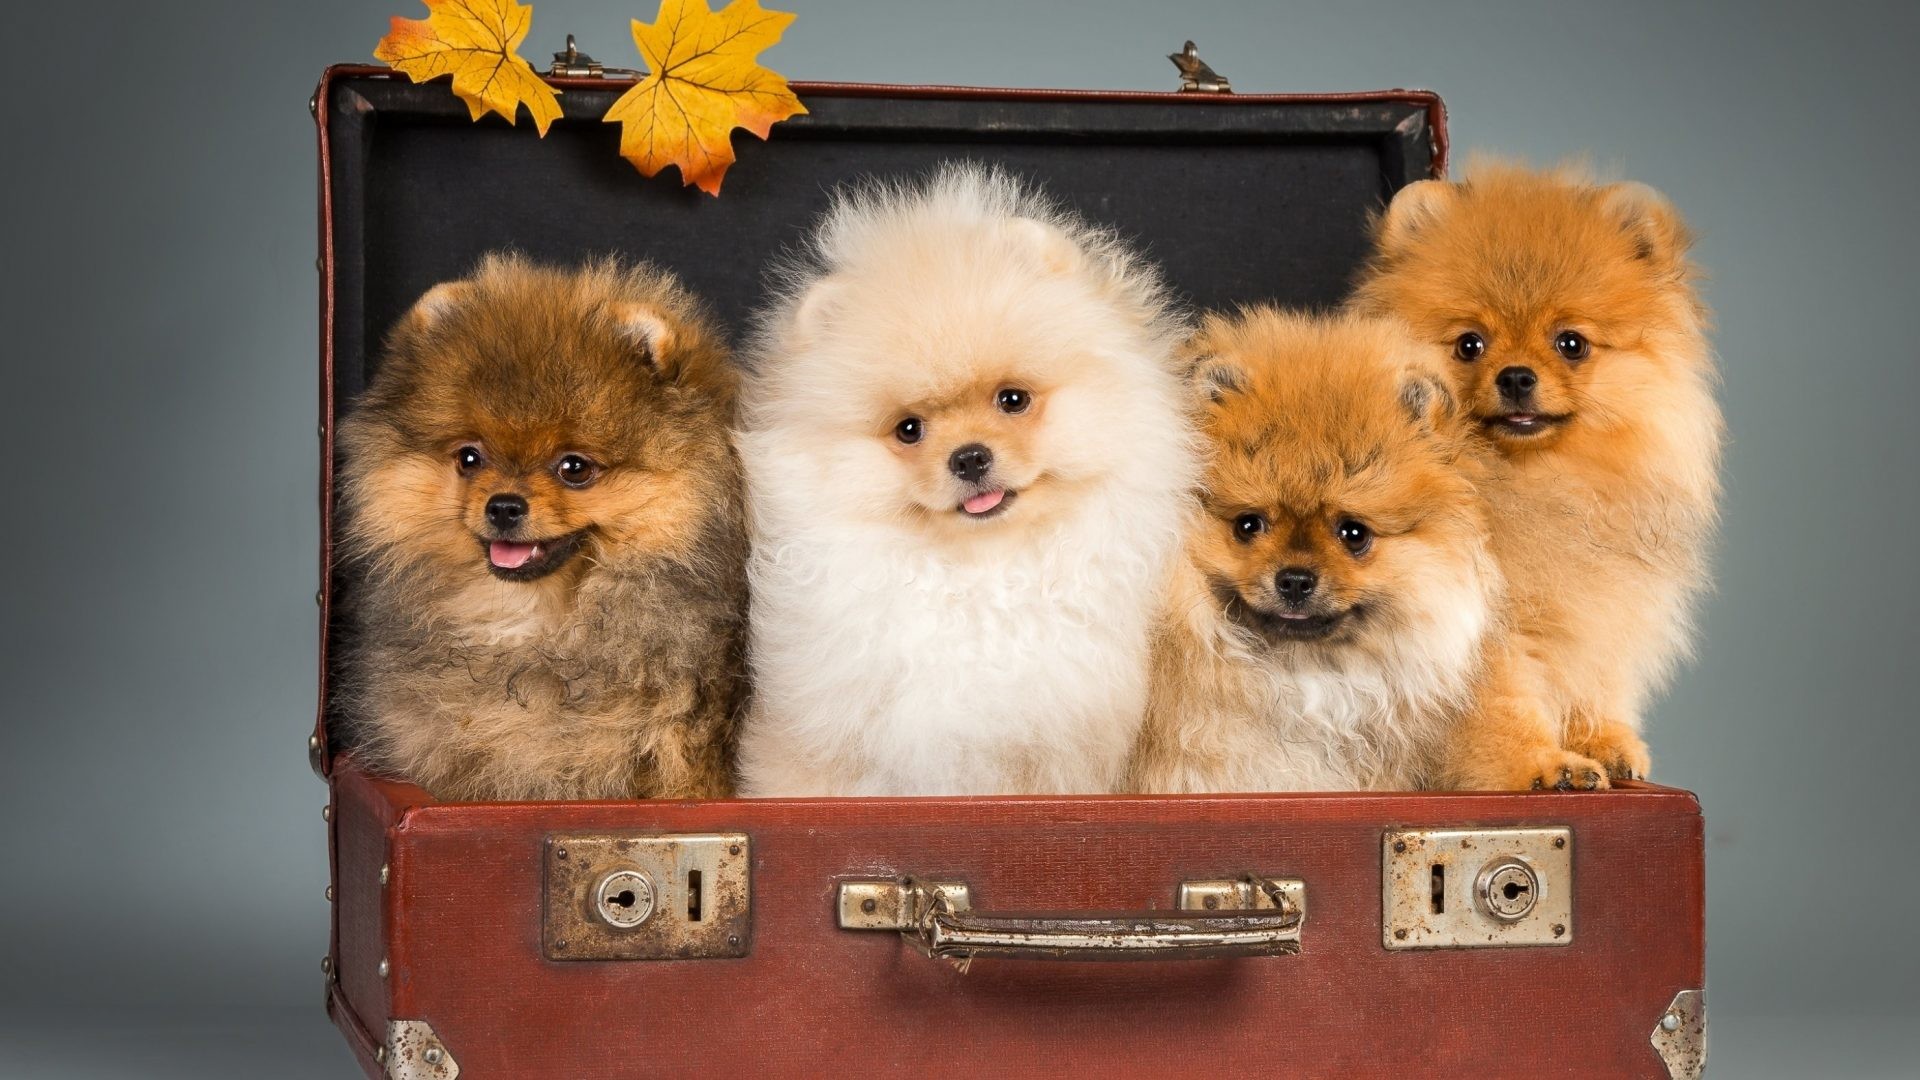 1920x1080 Pomeranian Tag - Puppy Autumn Cute Look Pomeranian Fur Dog Image Hd for HD  16: